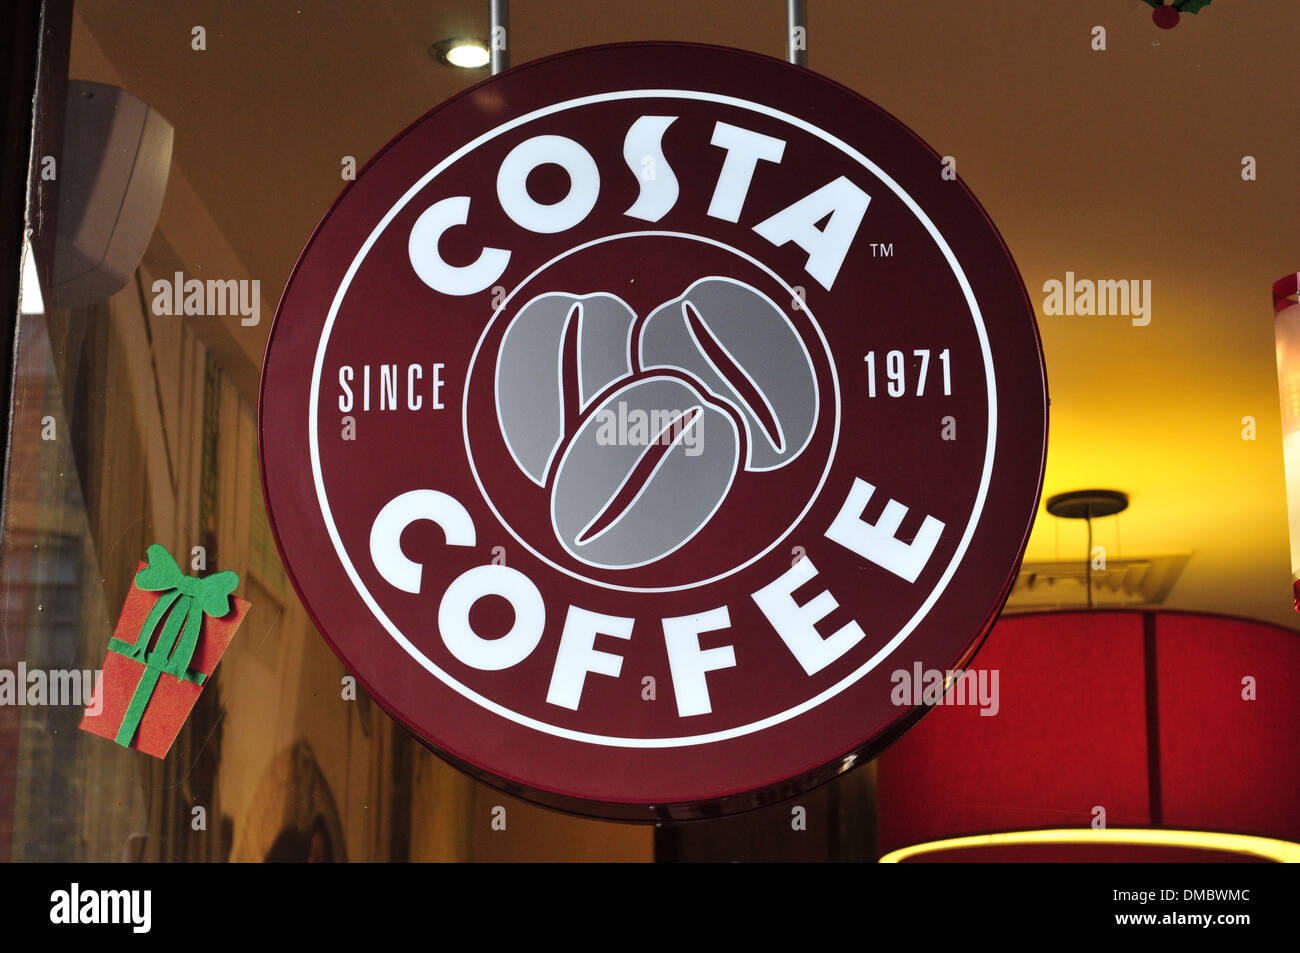 Costa coffee sign in London, UK Stock Photo